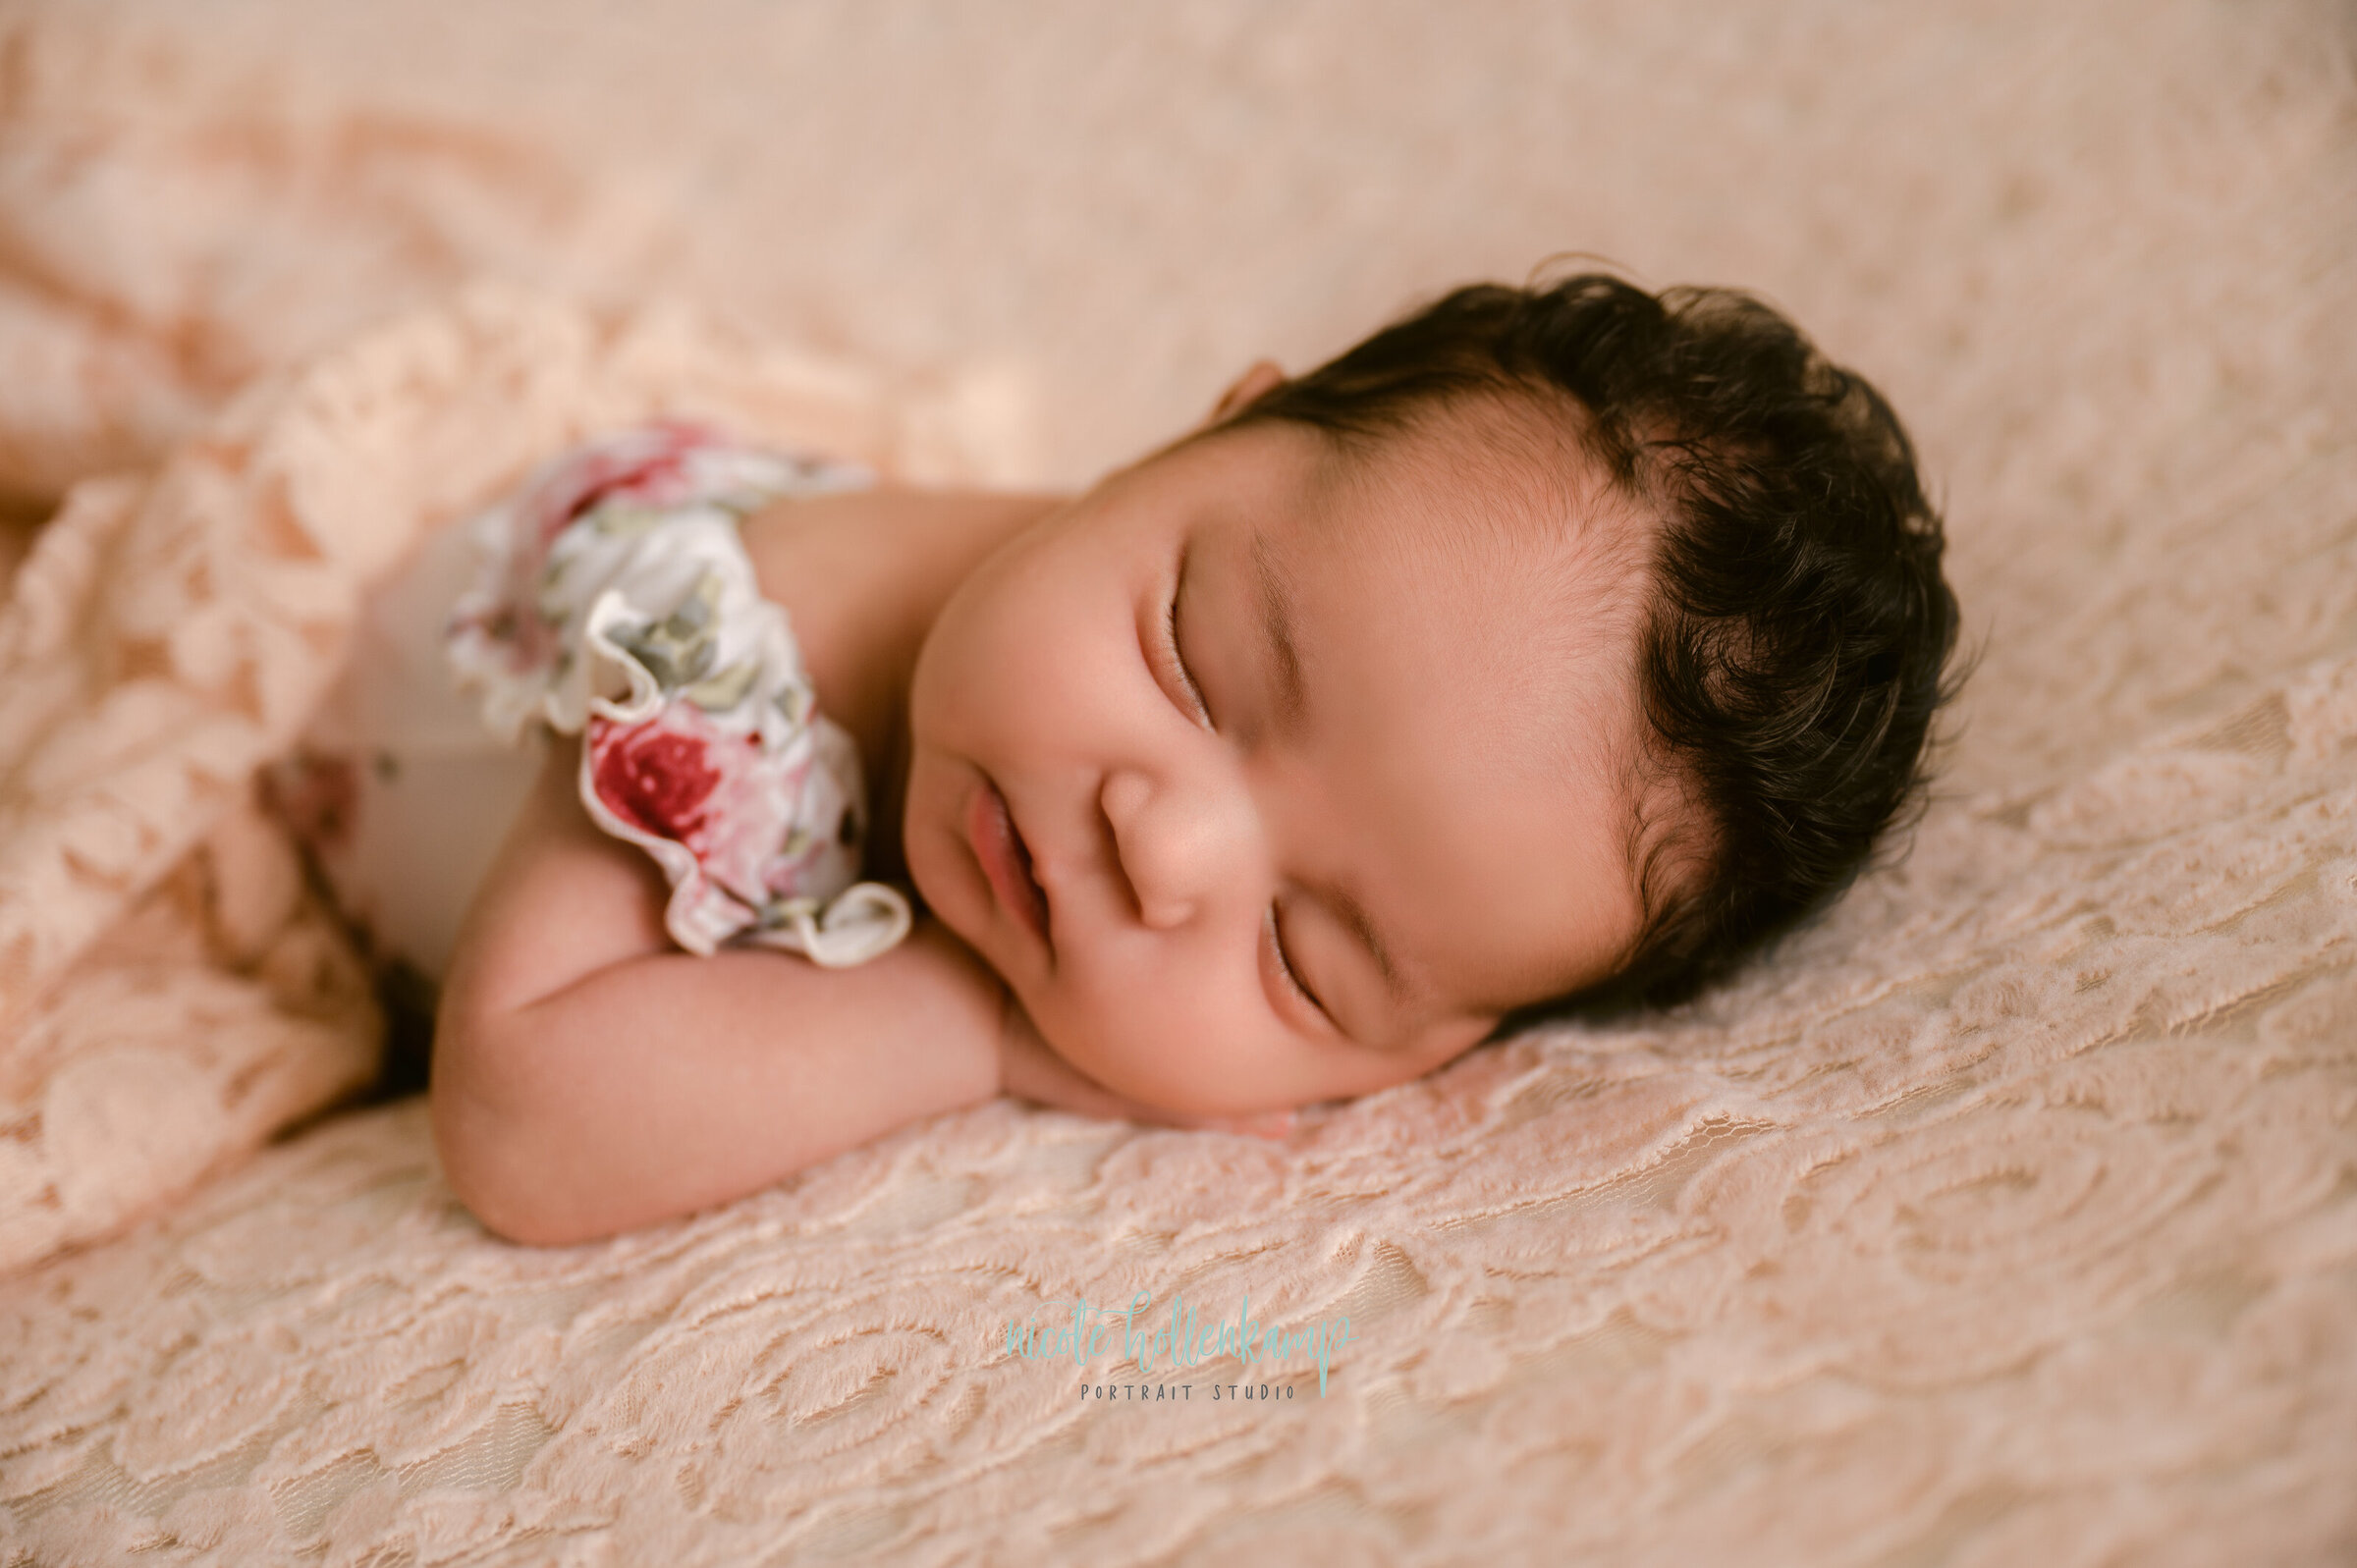 Nicole Hollenkamp - Baby Photographer | Princeton Minnesota | Photographing Newborns, Pregnancy,  Babies, Families in studio and outdoors